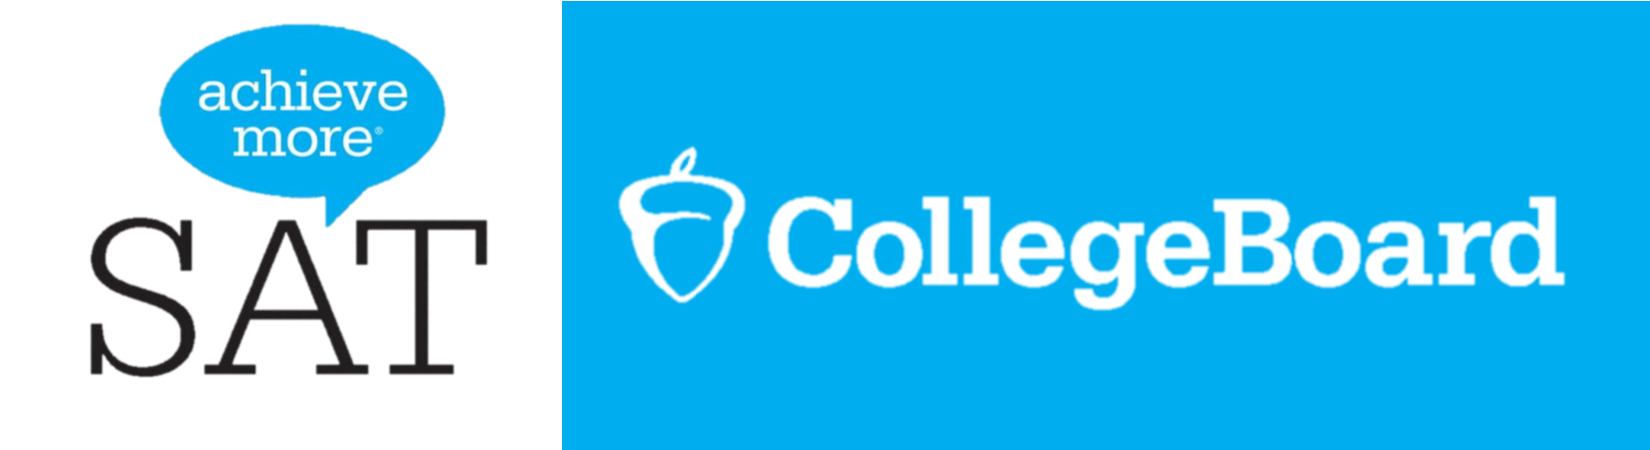 SAT test College Board logo